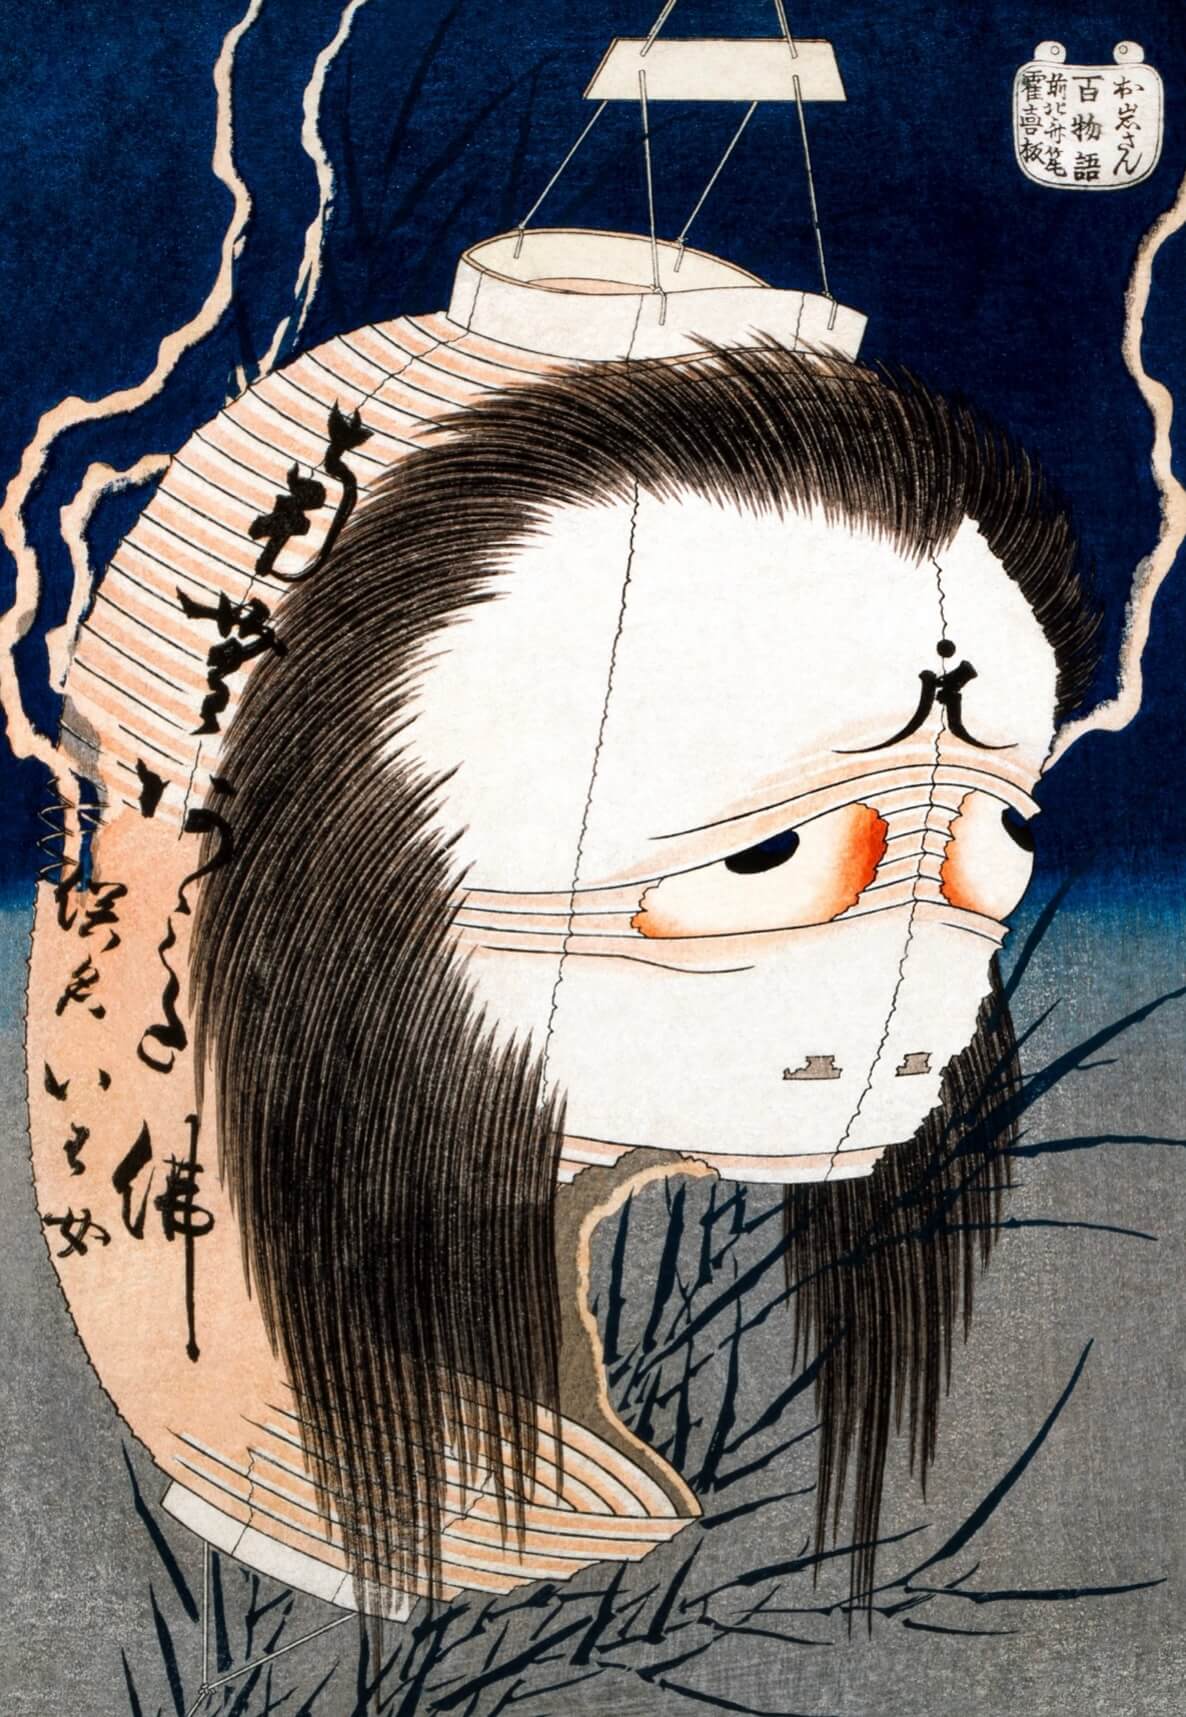 Hokusai's The Lantern Ghost